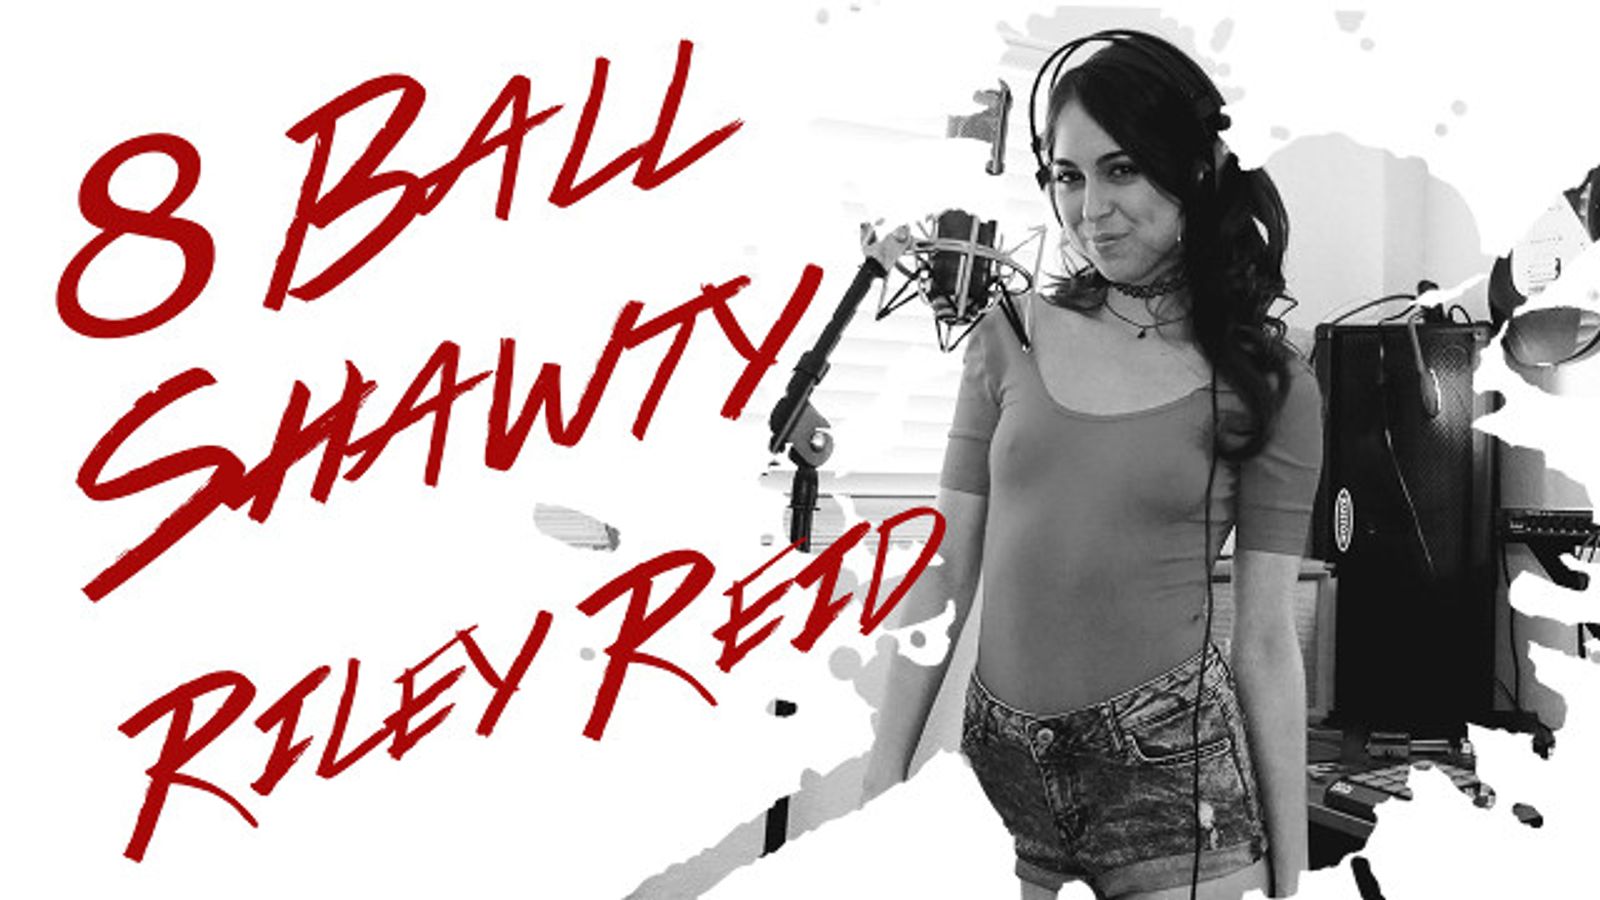 Riley Reid Launches Rap Video '8 Ball Shawty'